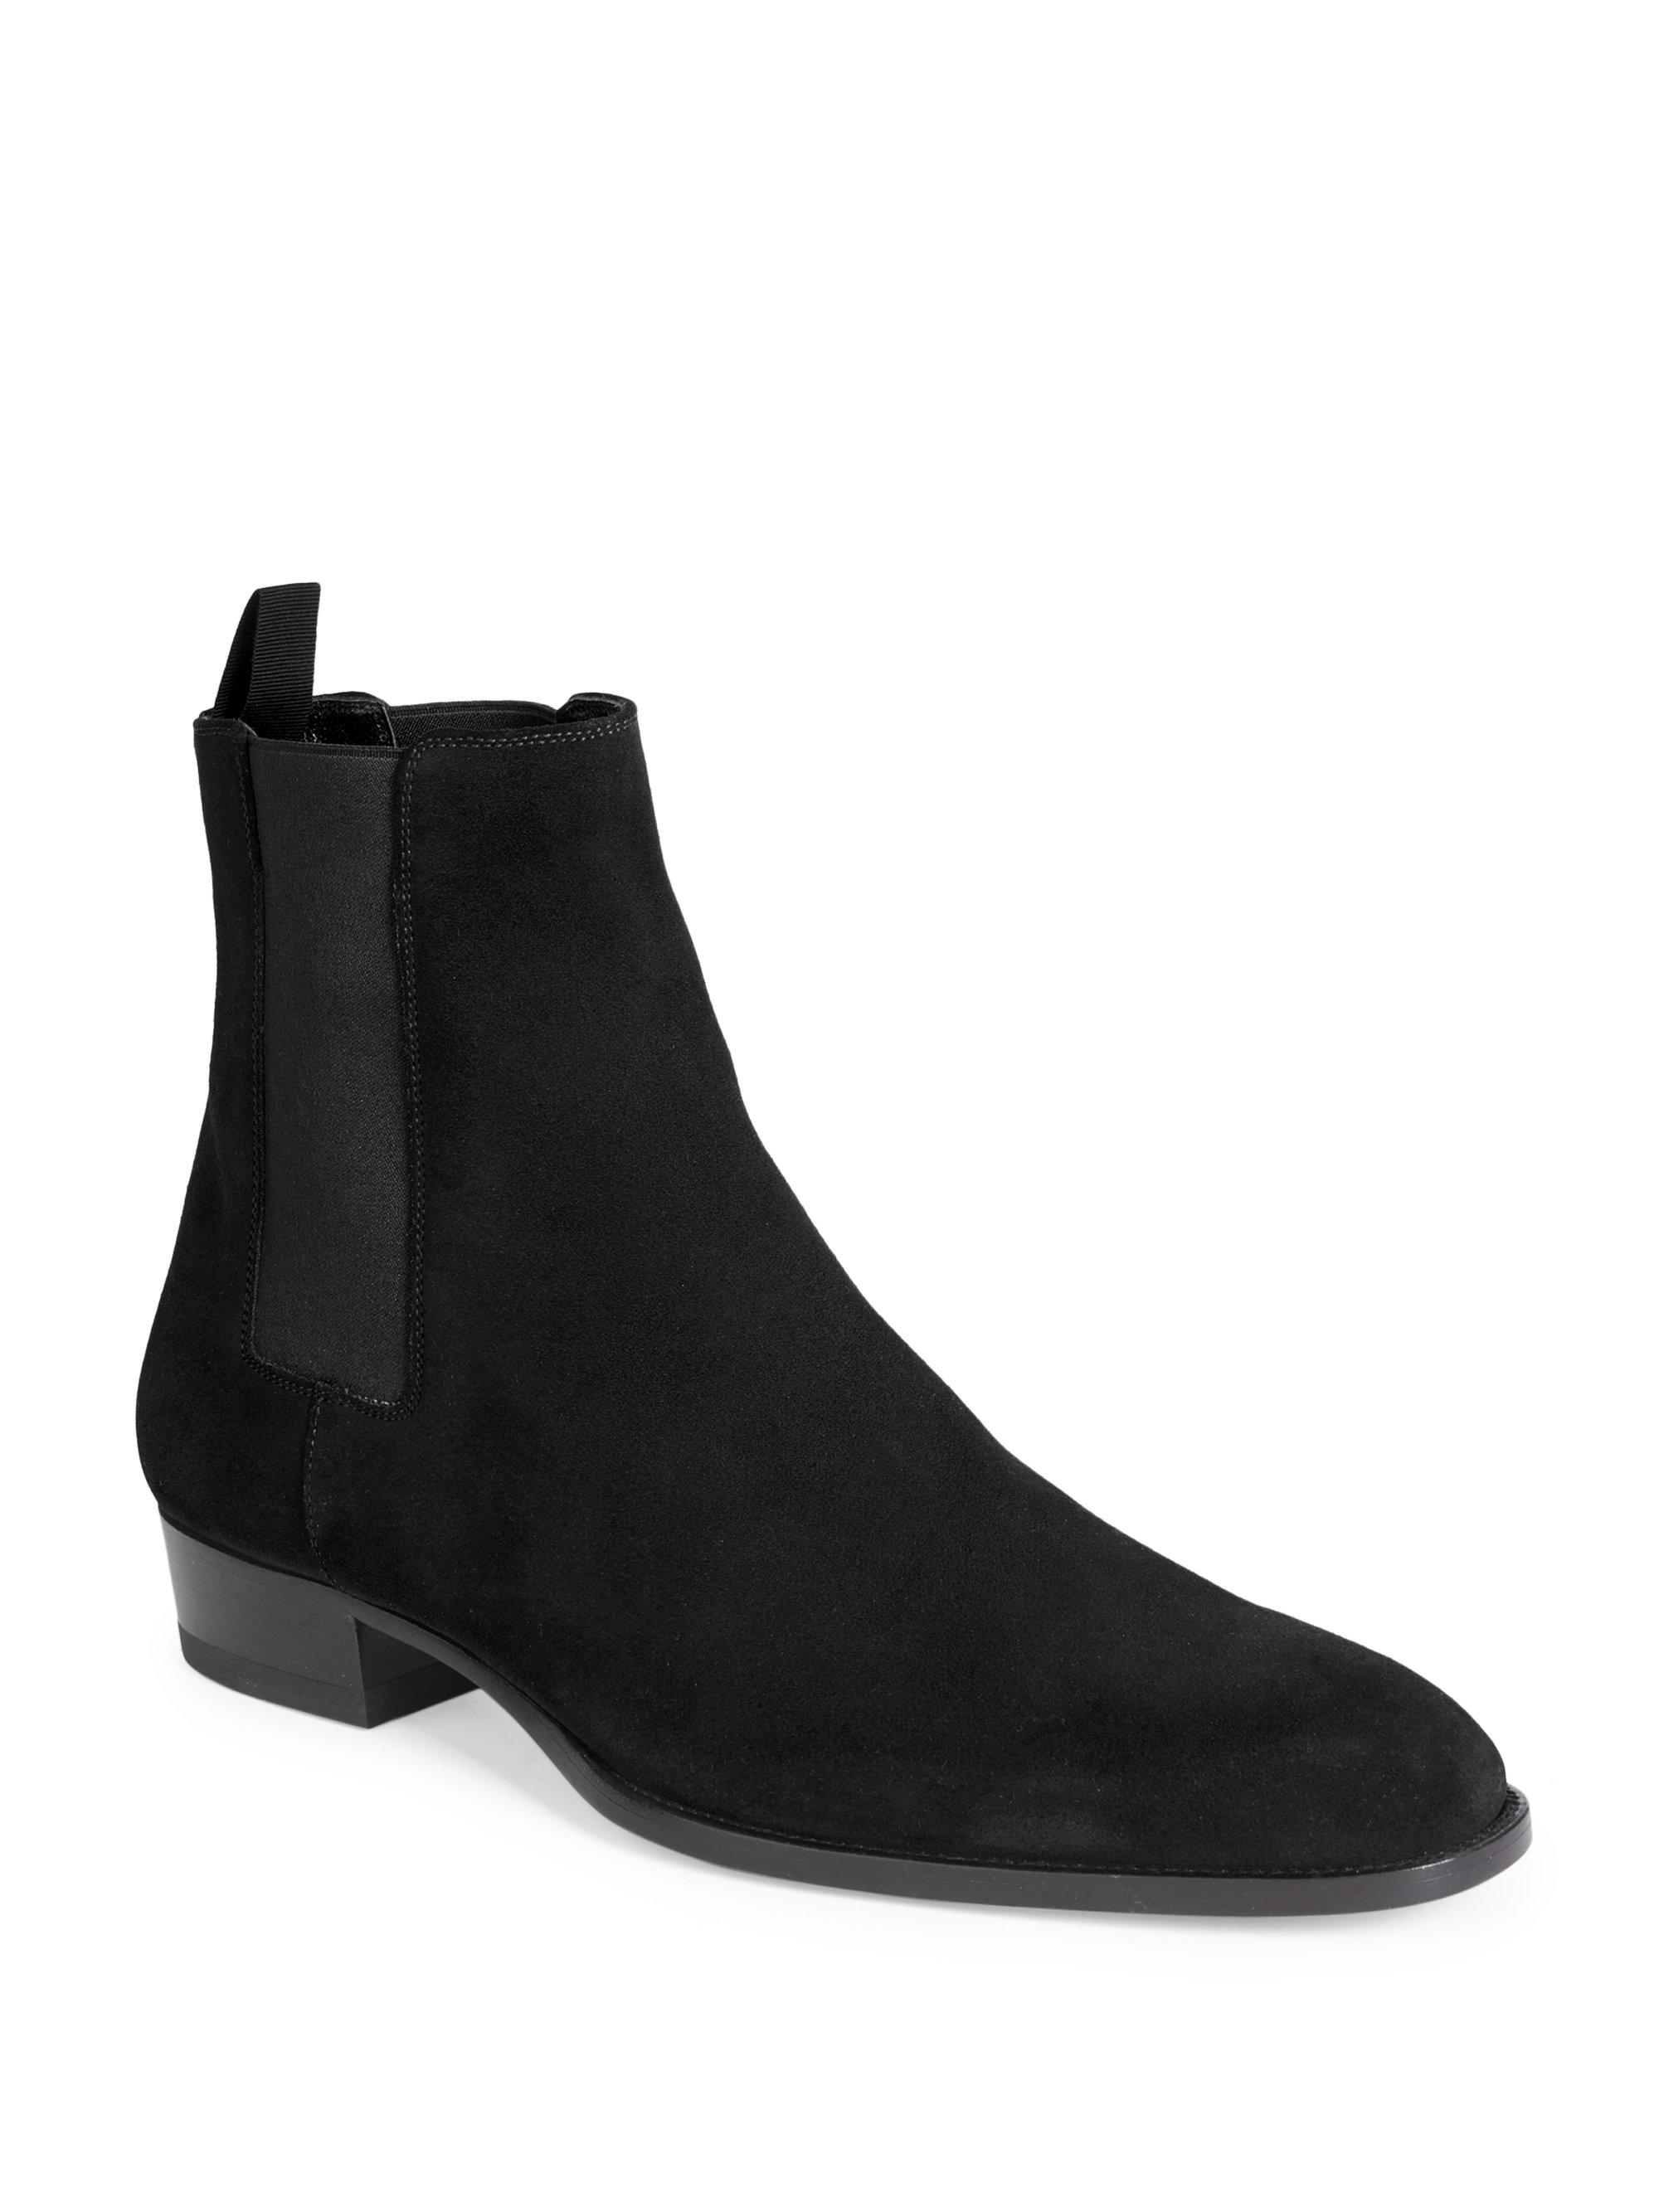 Lyst - Saint Laurent Wyatt Chelsea Boots in Black